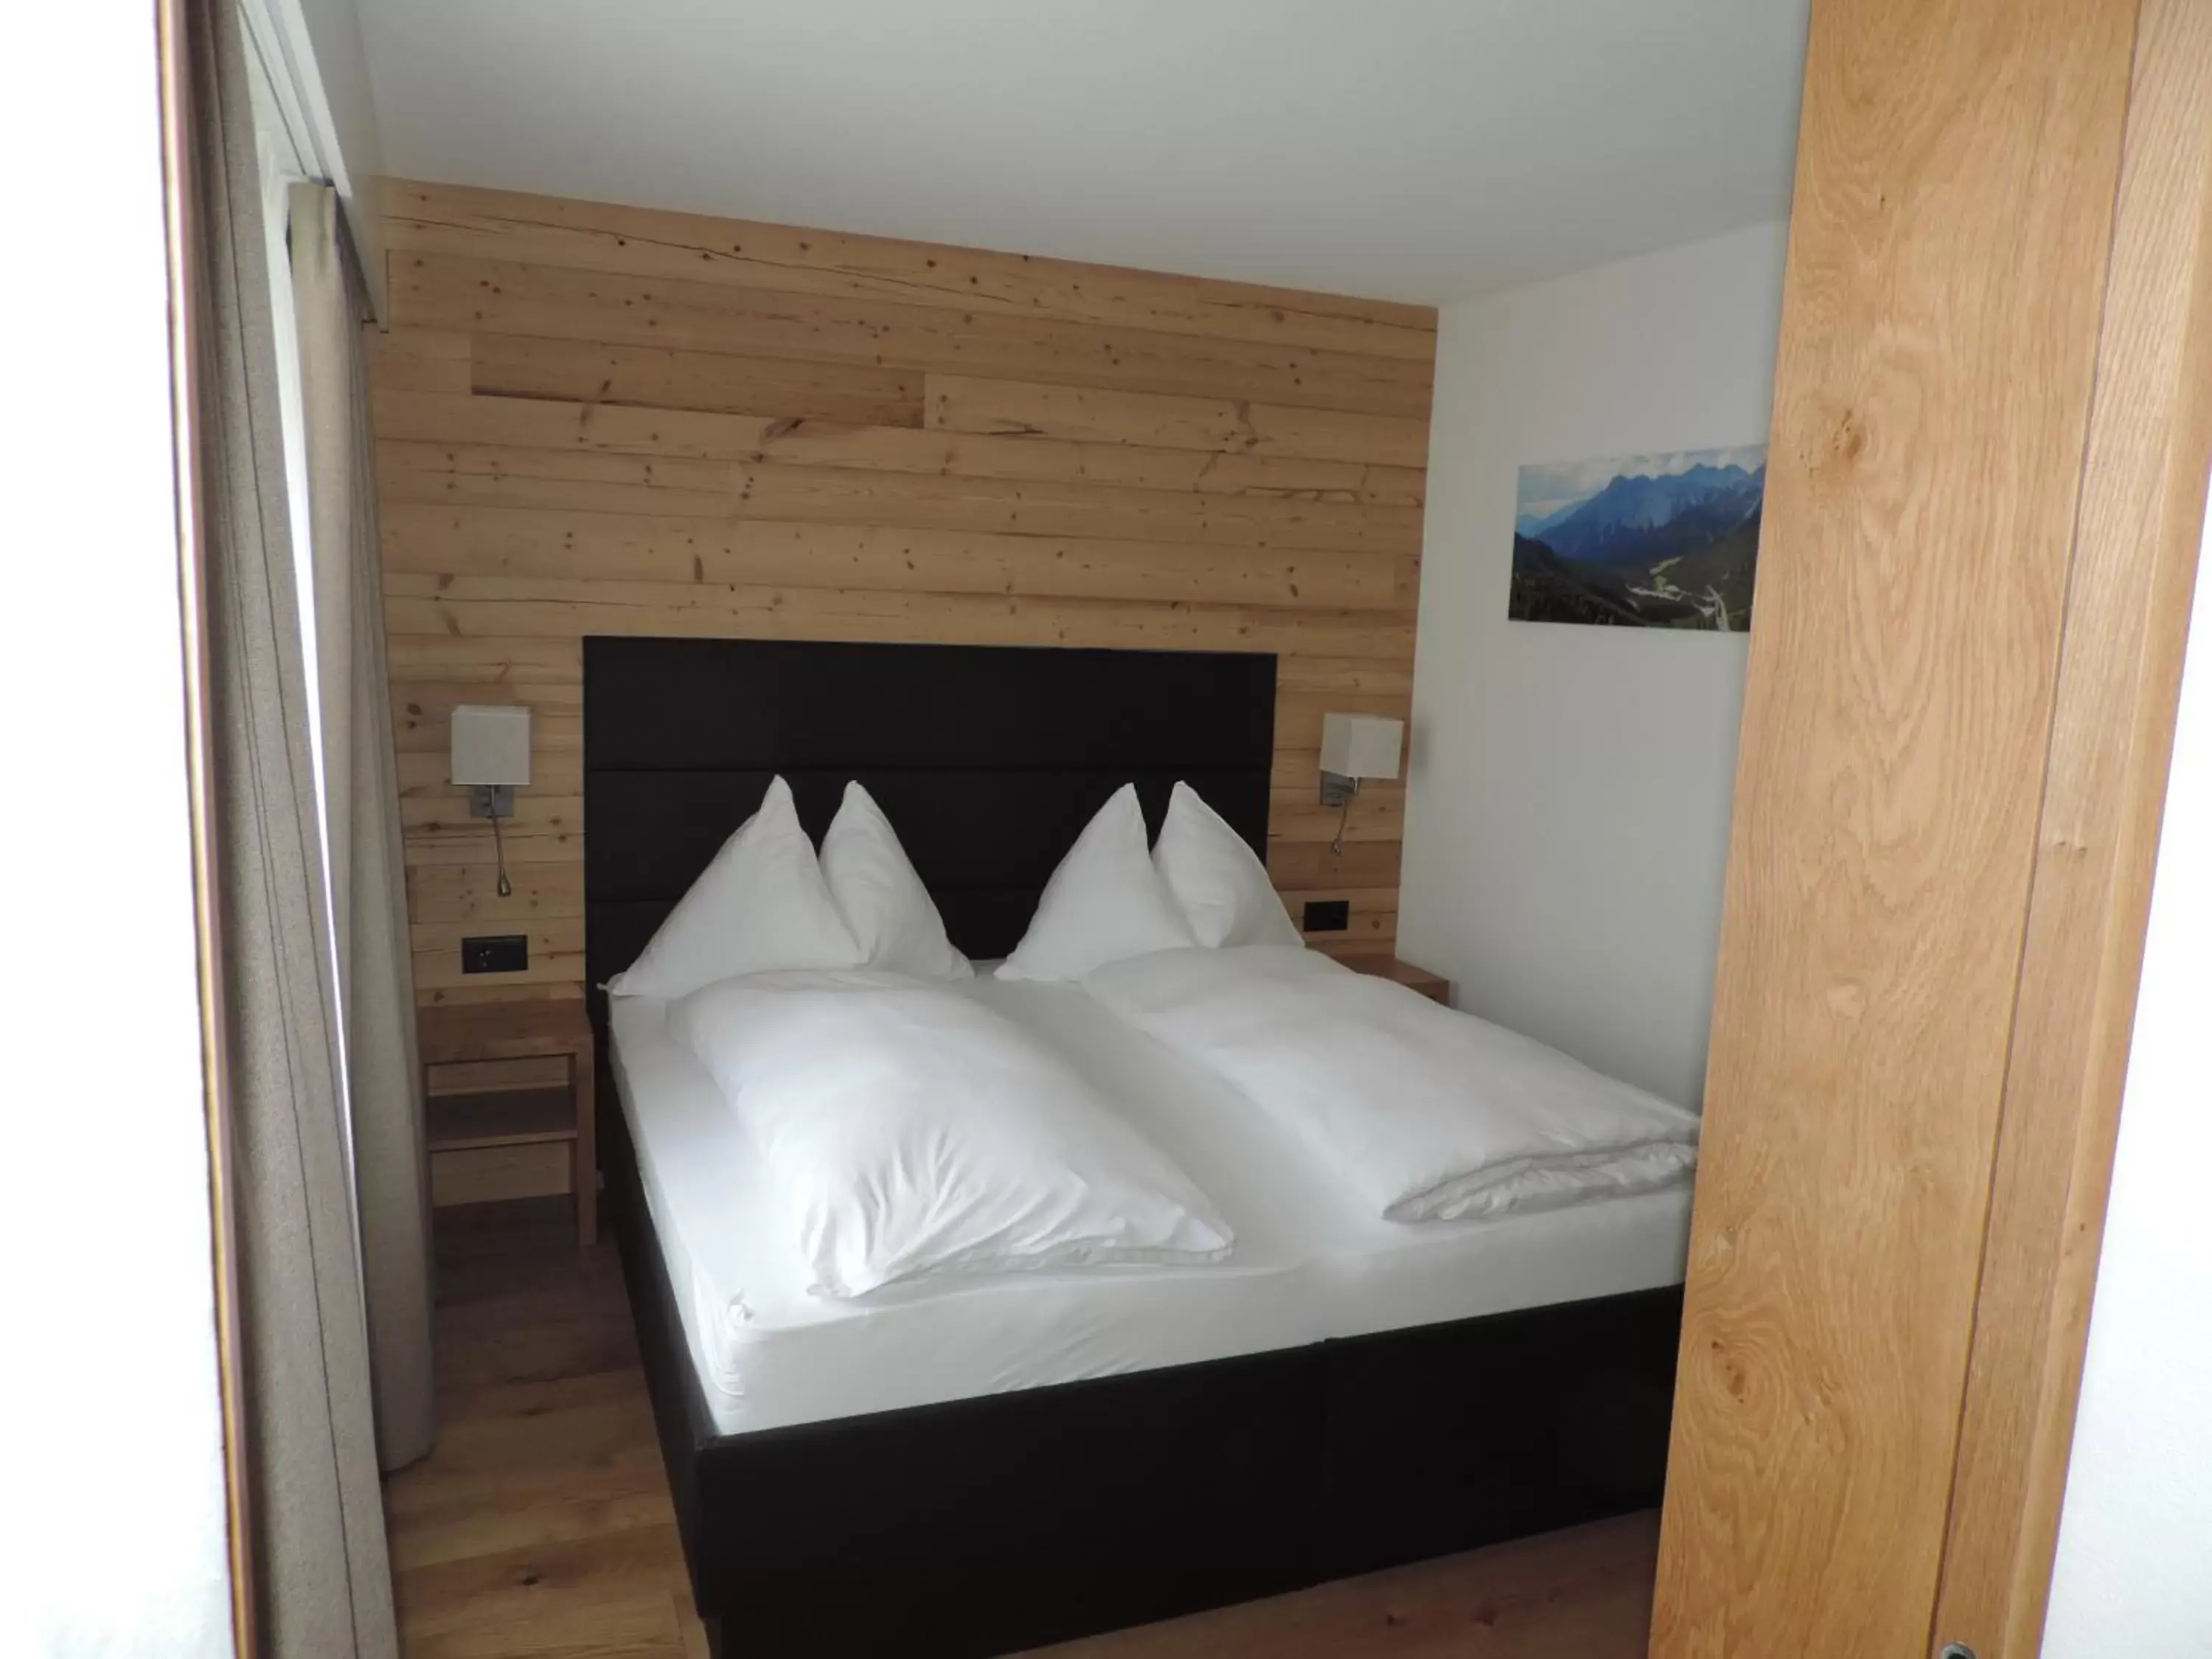 Bed, Room Photo in Hotel Spöl Restaurant